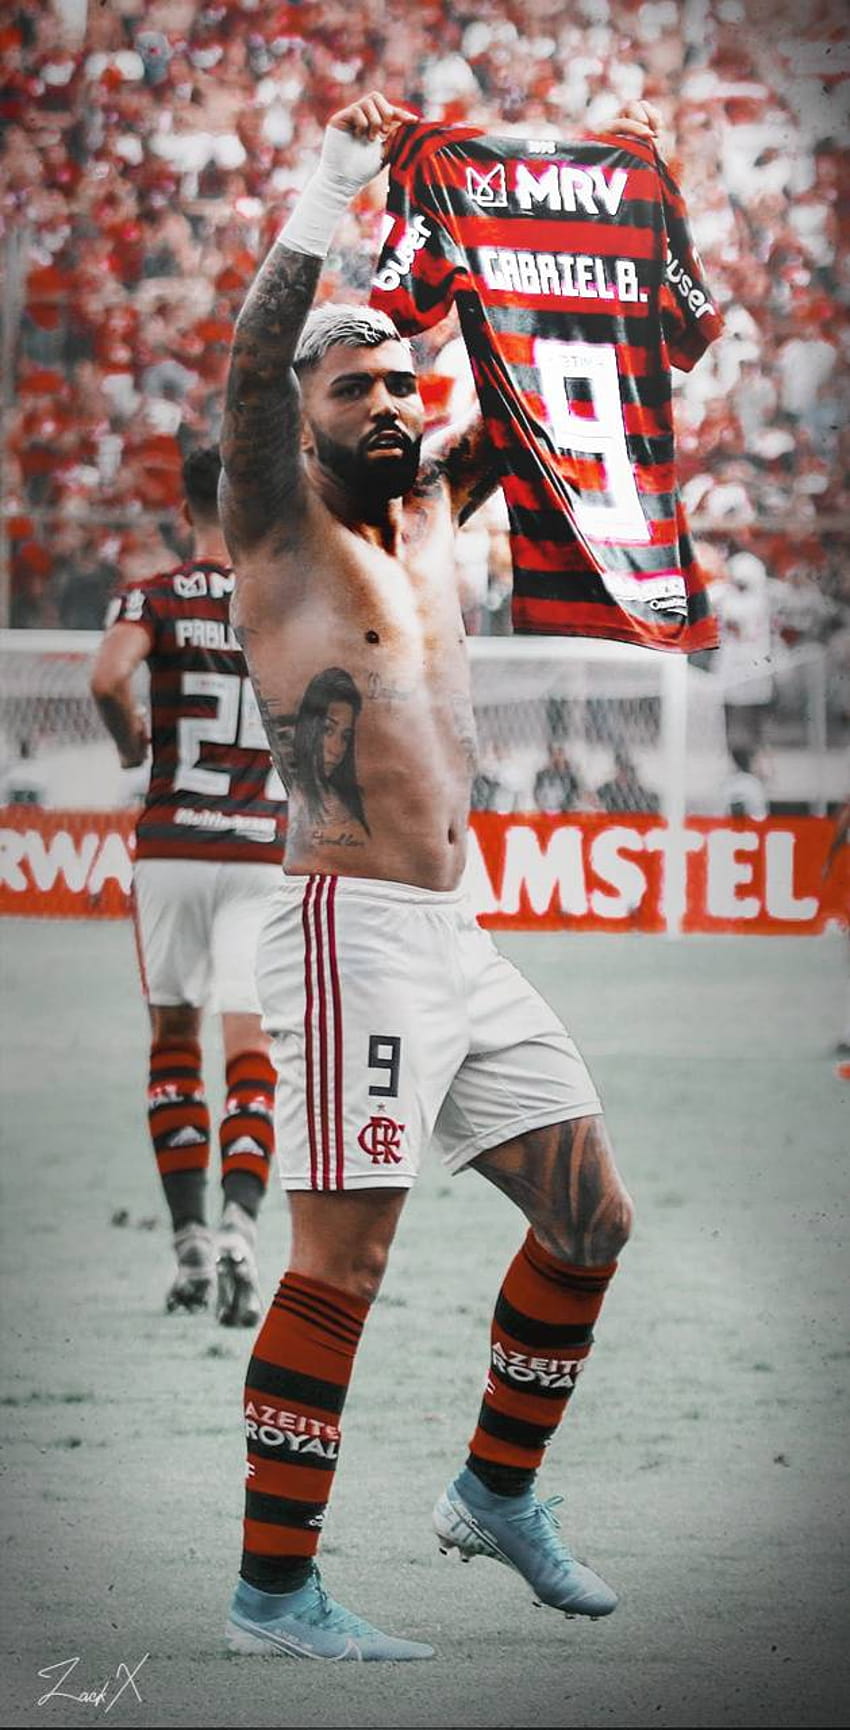 ZackAX tarafından GabiGol Flamengo HD telefon duvar kağıdı